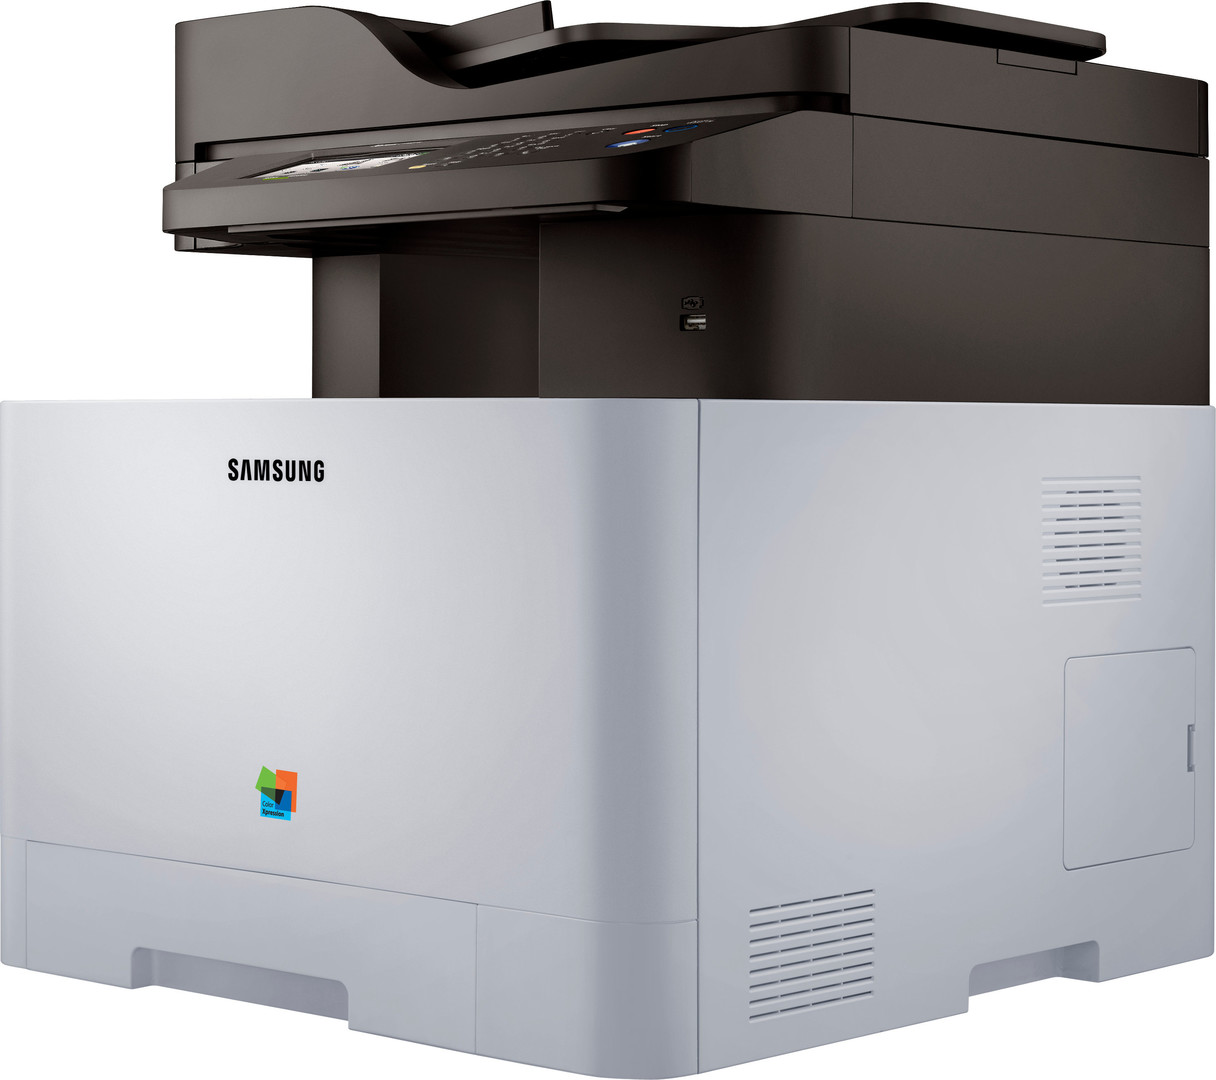 Samsung MultiXpress C1860FW printer/all-in-one - Hardware Info